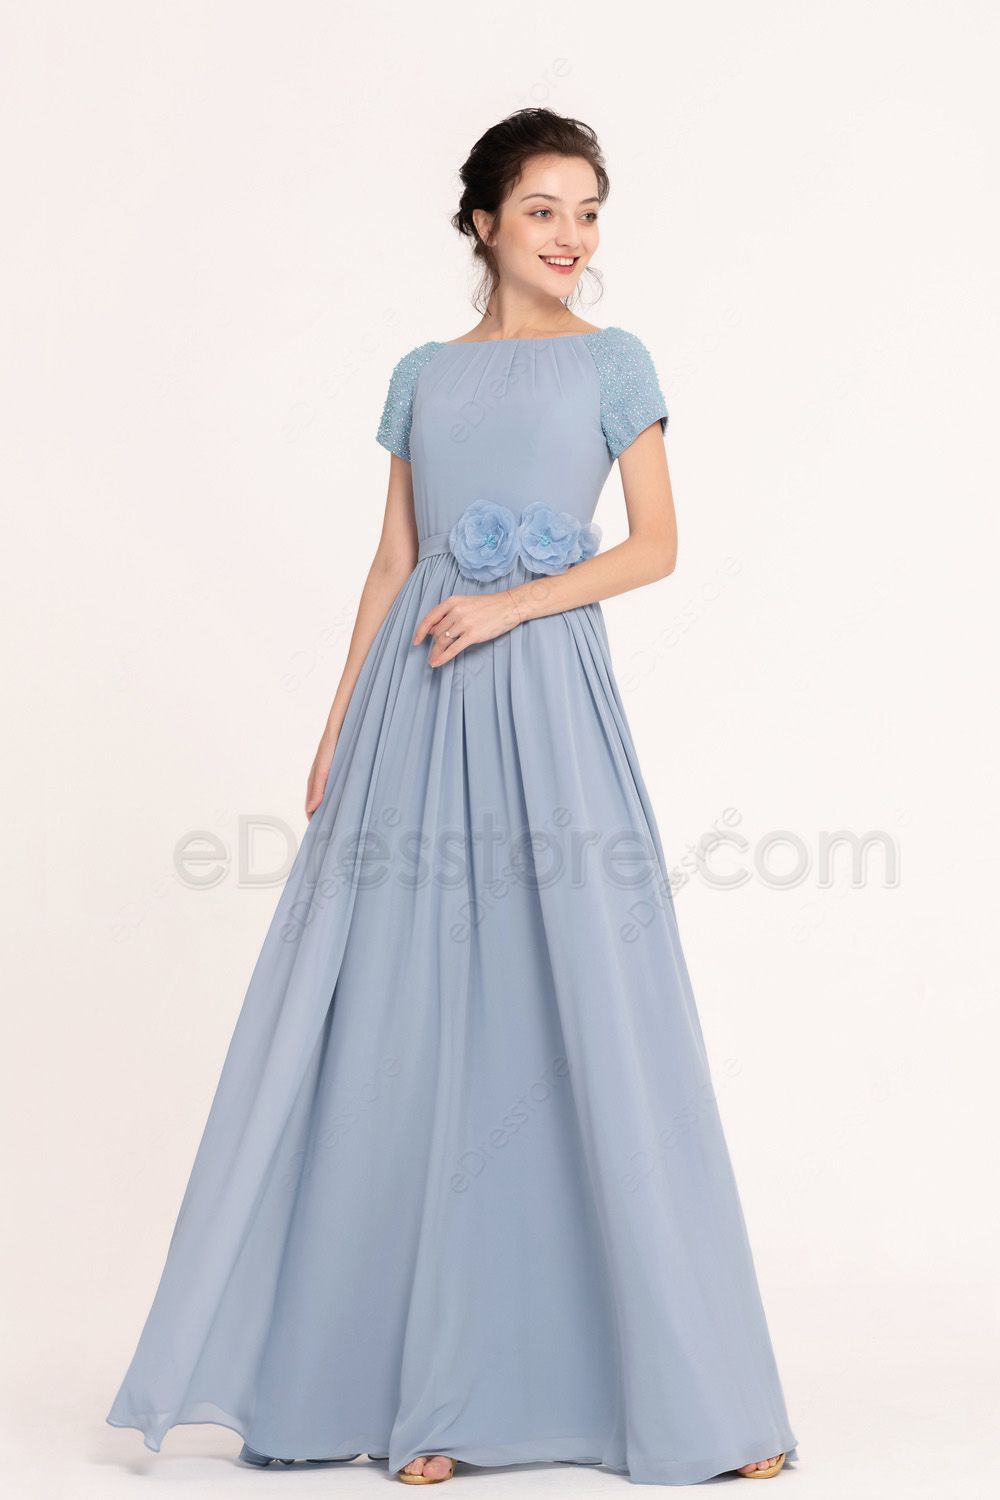 Dusty Blue Beaded Modest Bridesmaid Dress with short sleeves | eDresstore